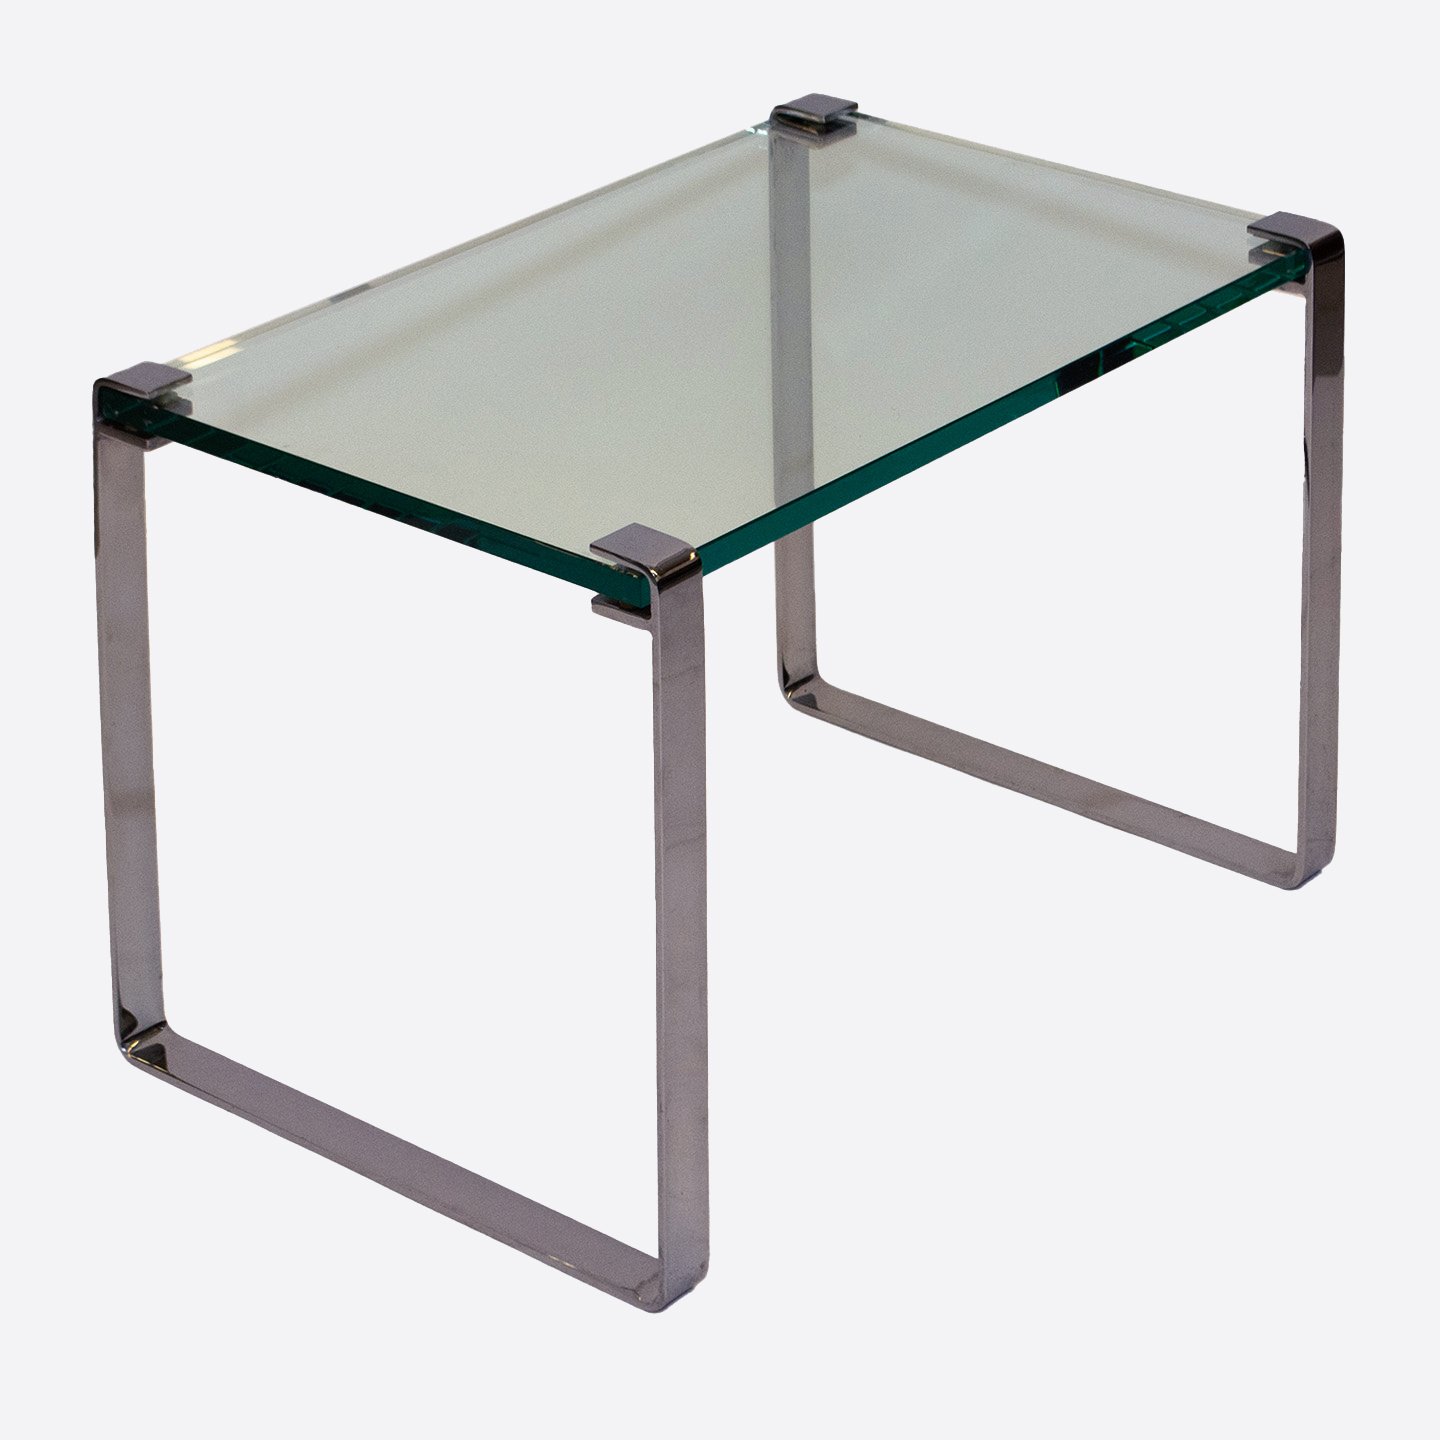 M-glass-table2.jpg